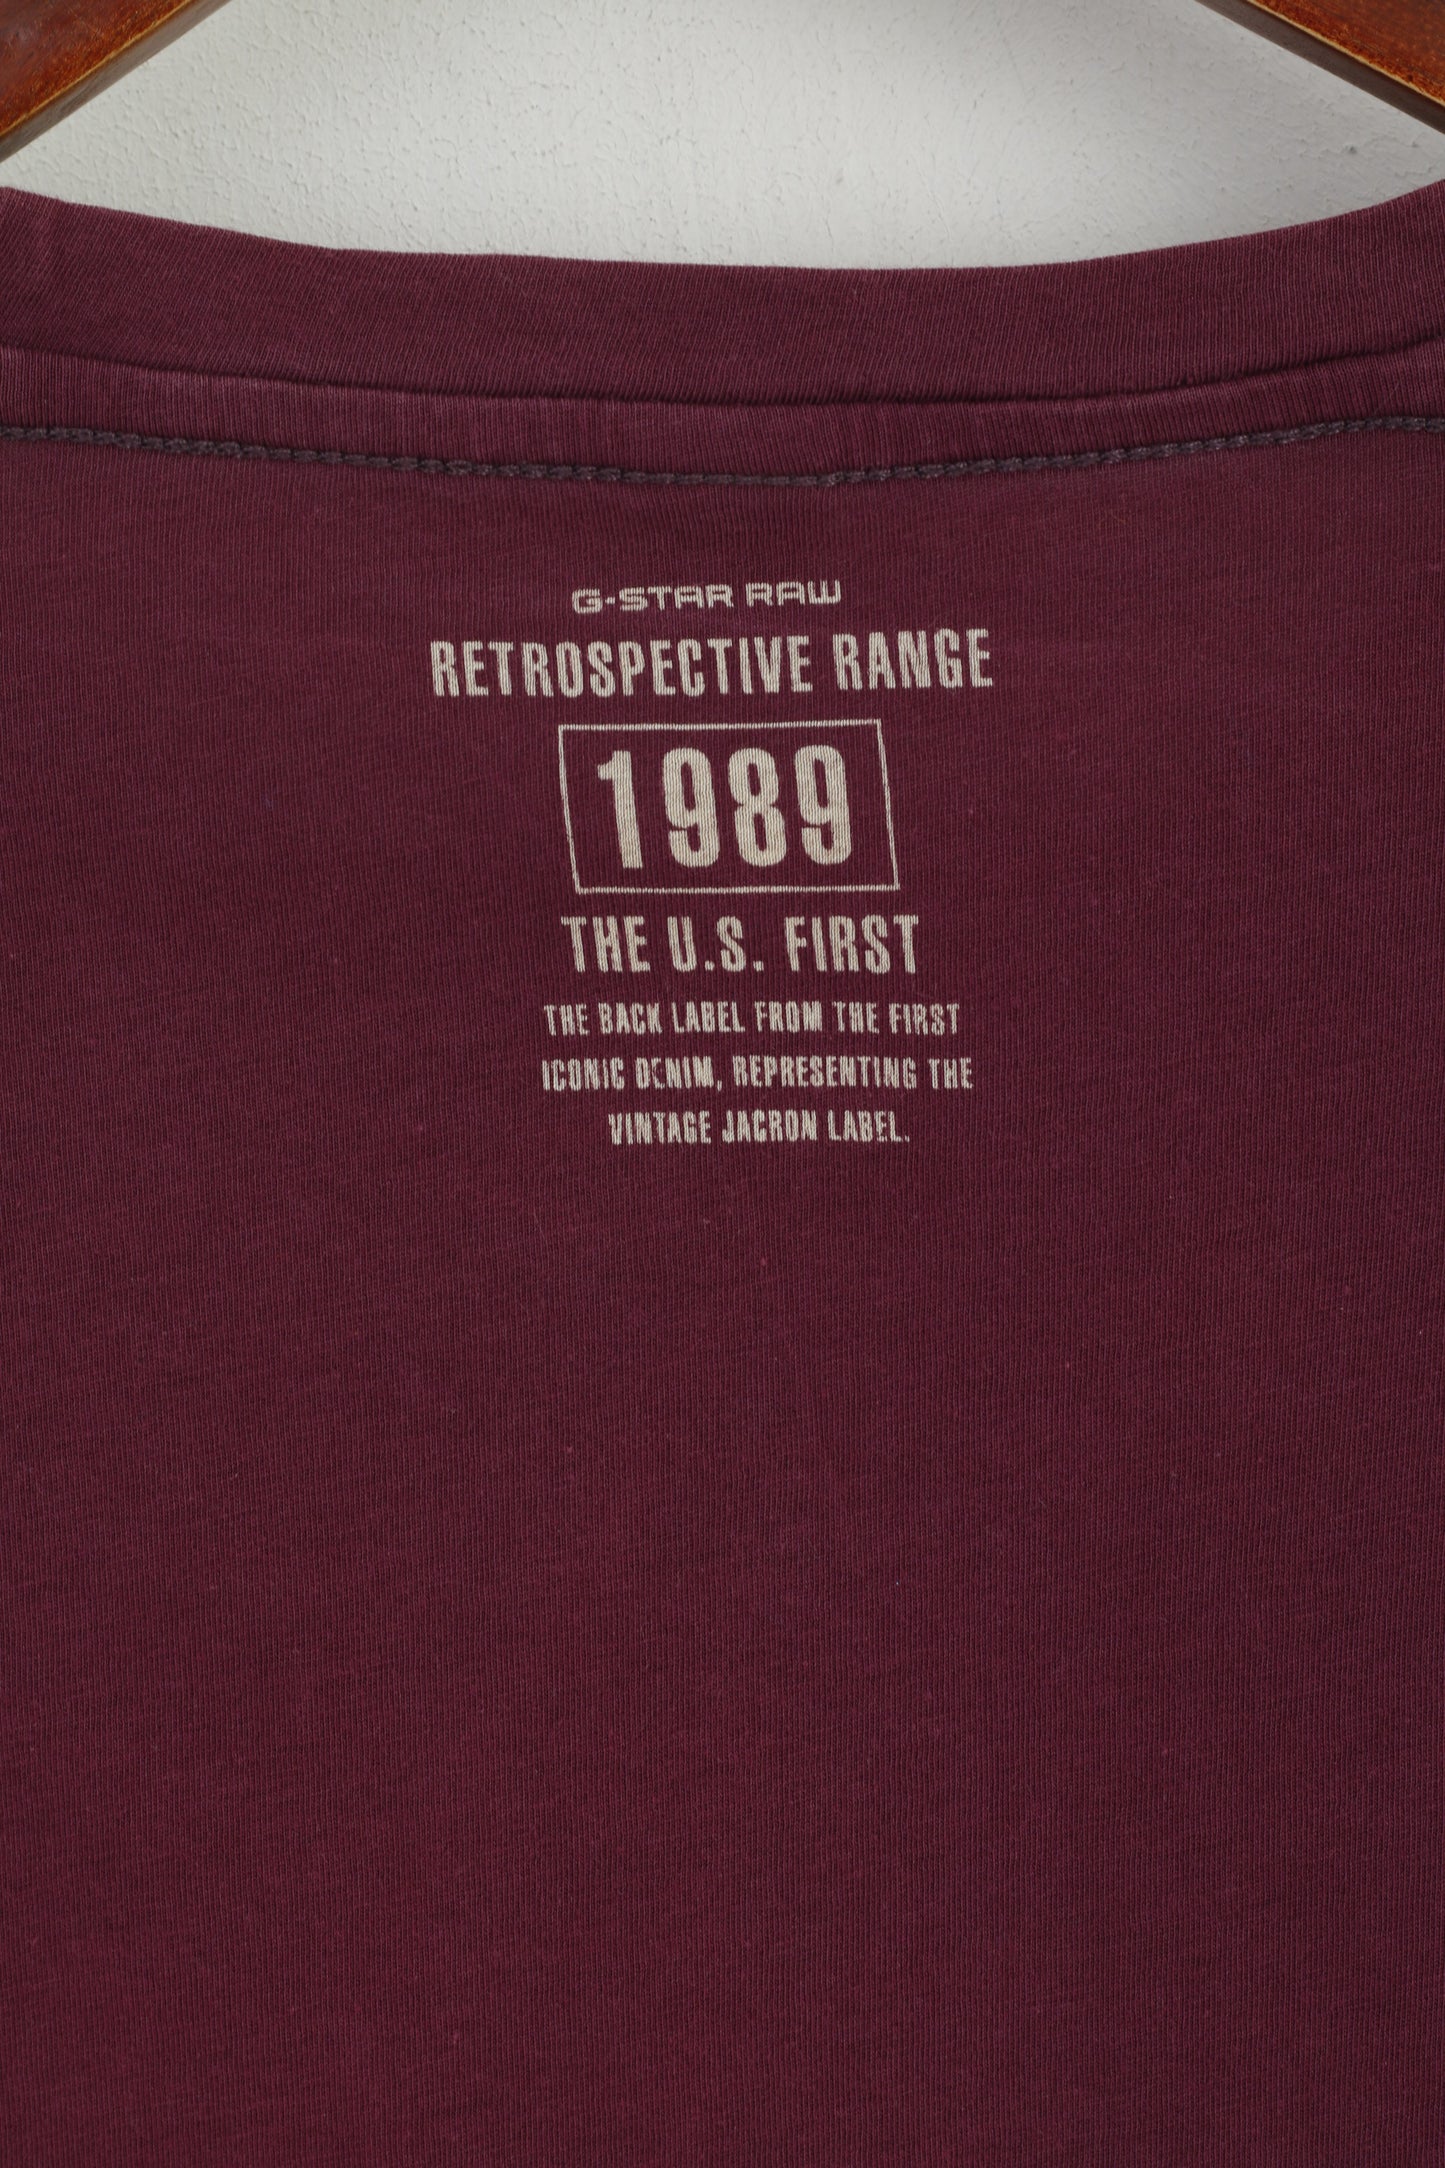 G-STAR RAW Men M (S) Shirt Plum Cotton Graphic 1989 Retrospective Range Top